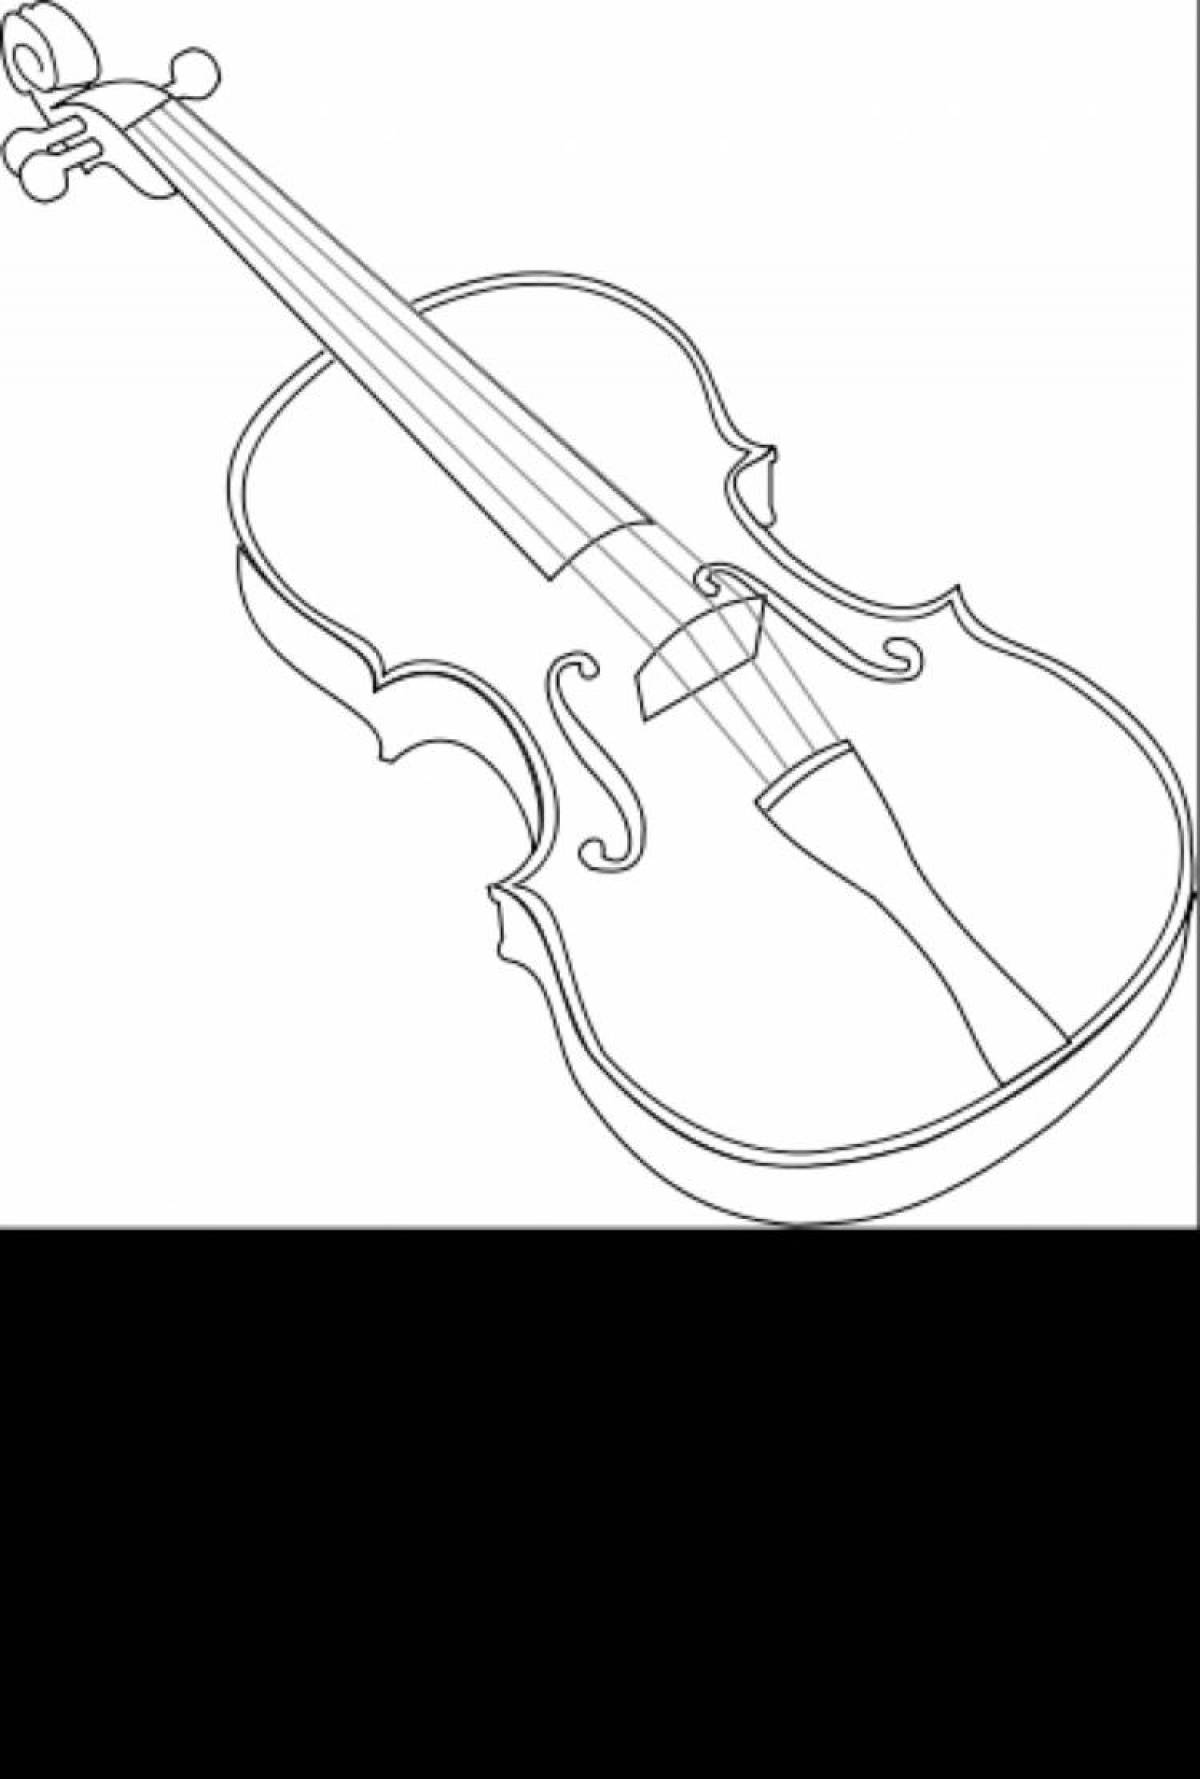 Vibrant violin coloring page